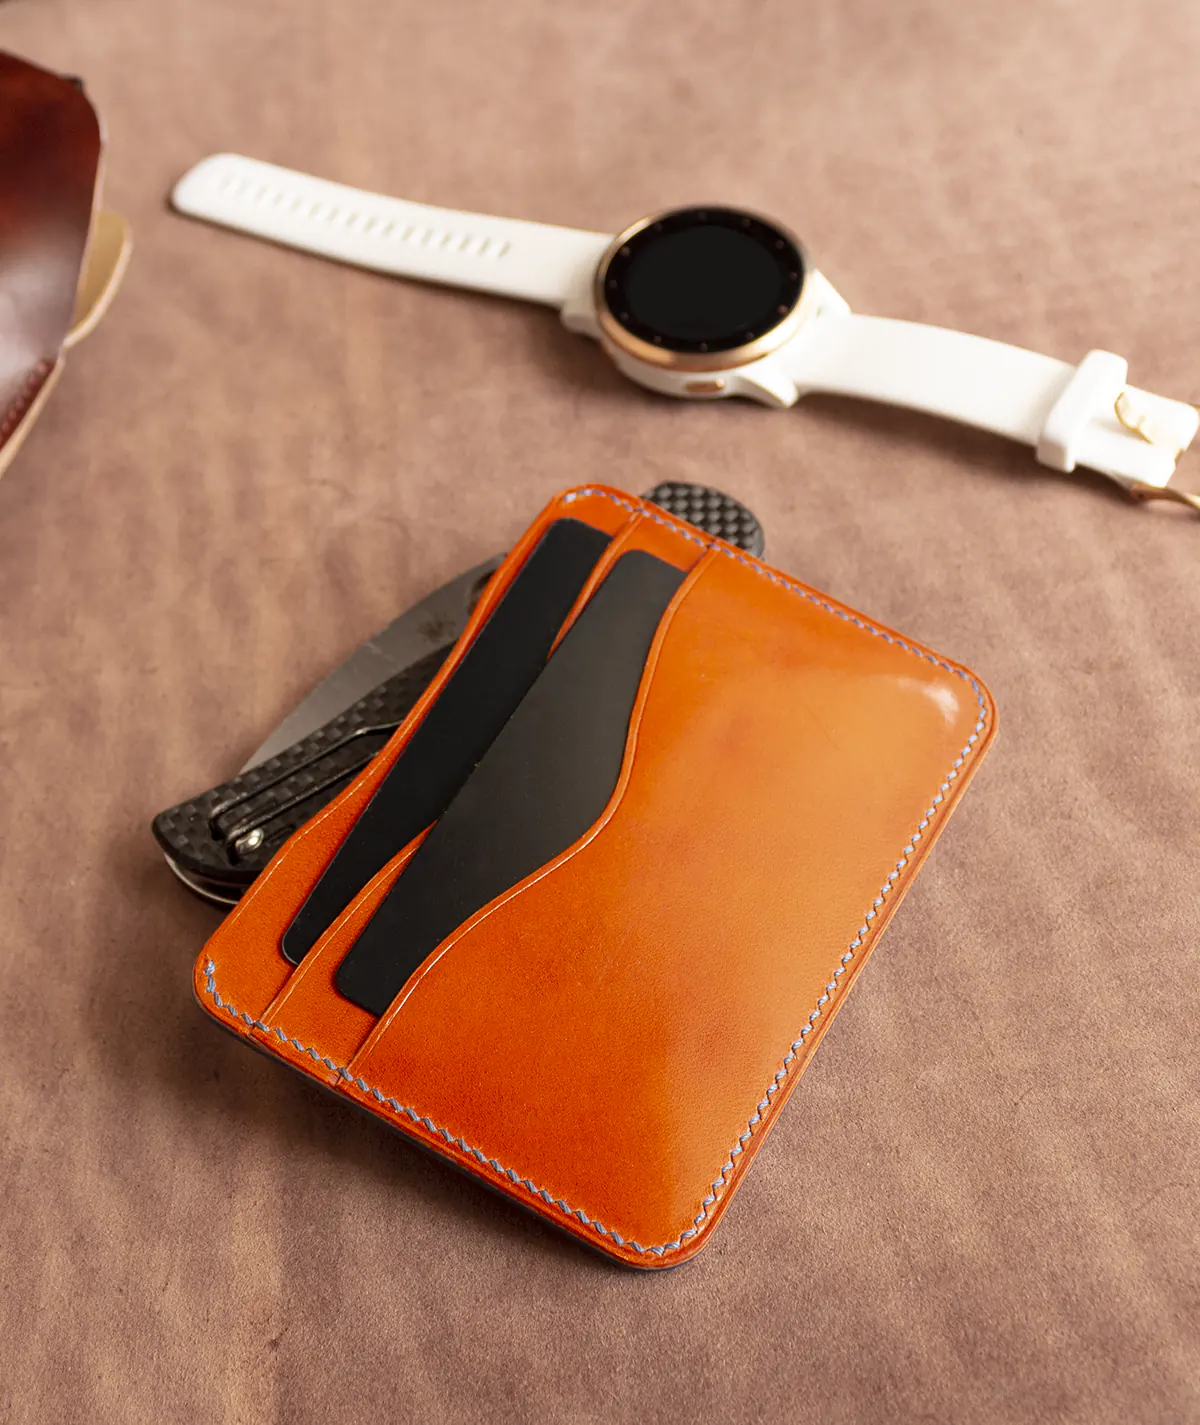 possala designs orange leather card wallet